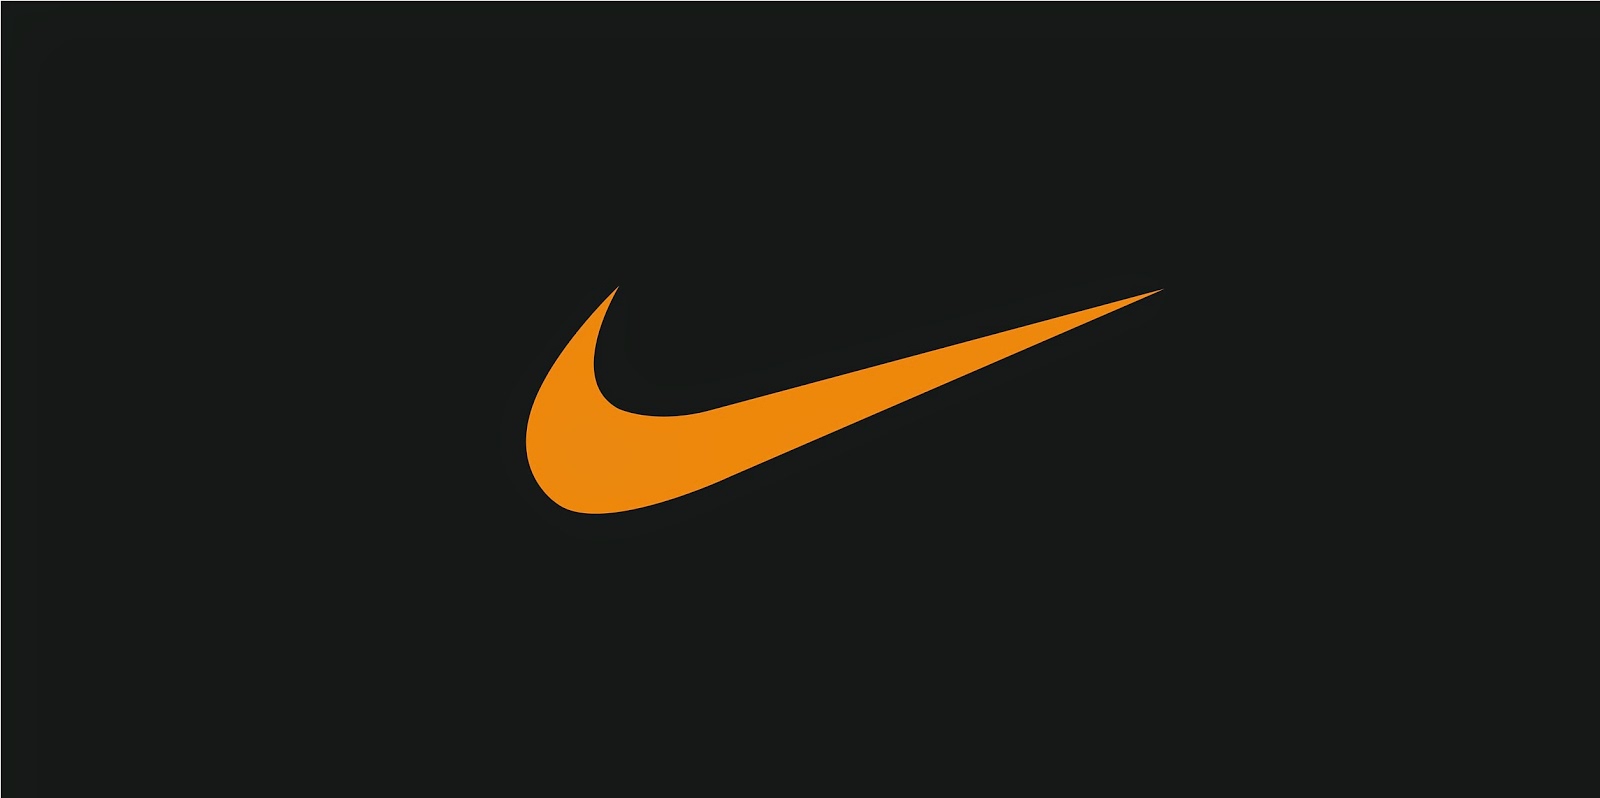 Cool Nike Logos Images HD Wallpapers Wallfoycom